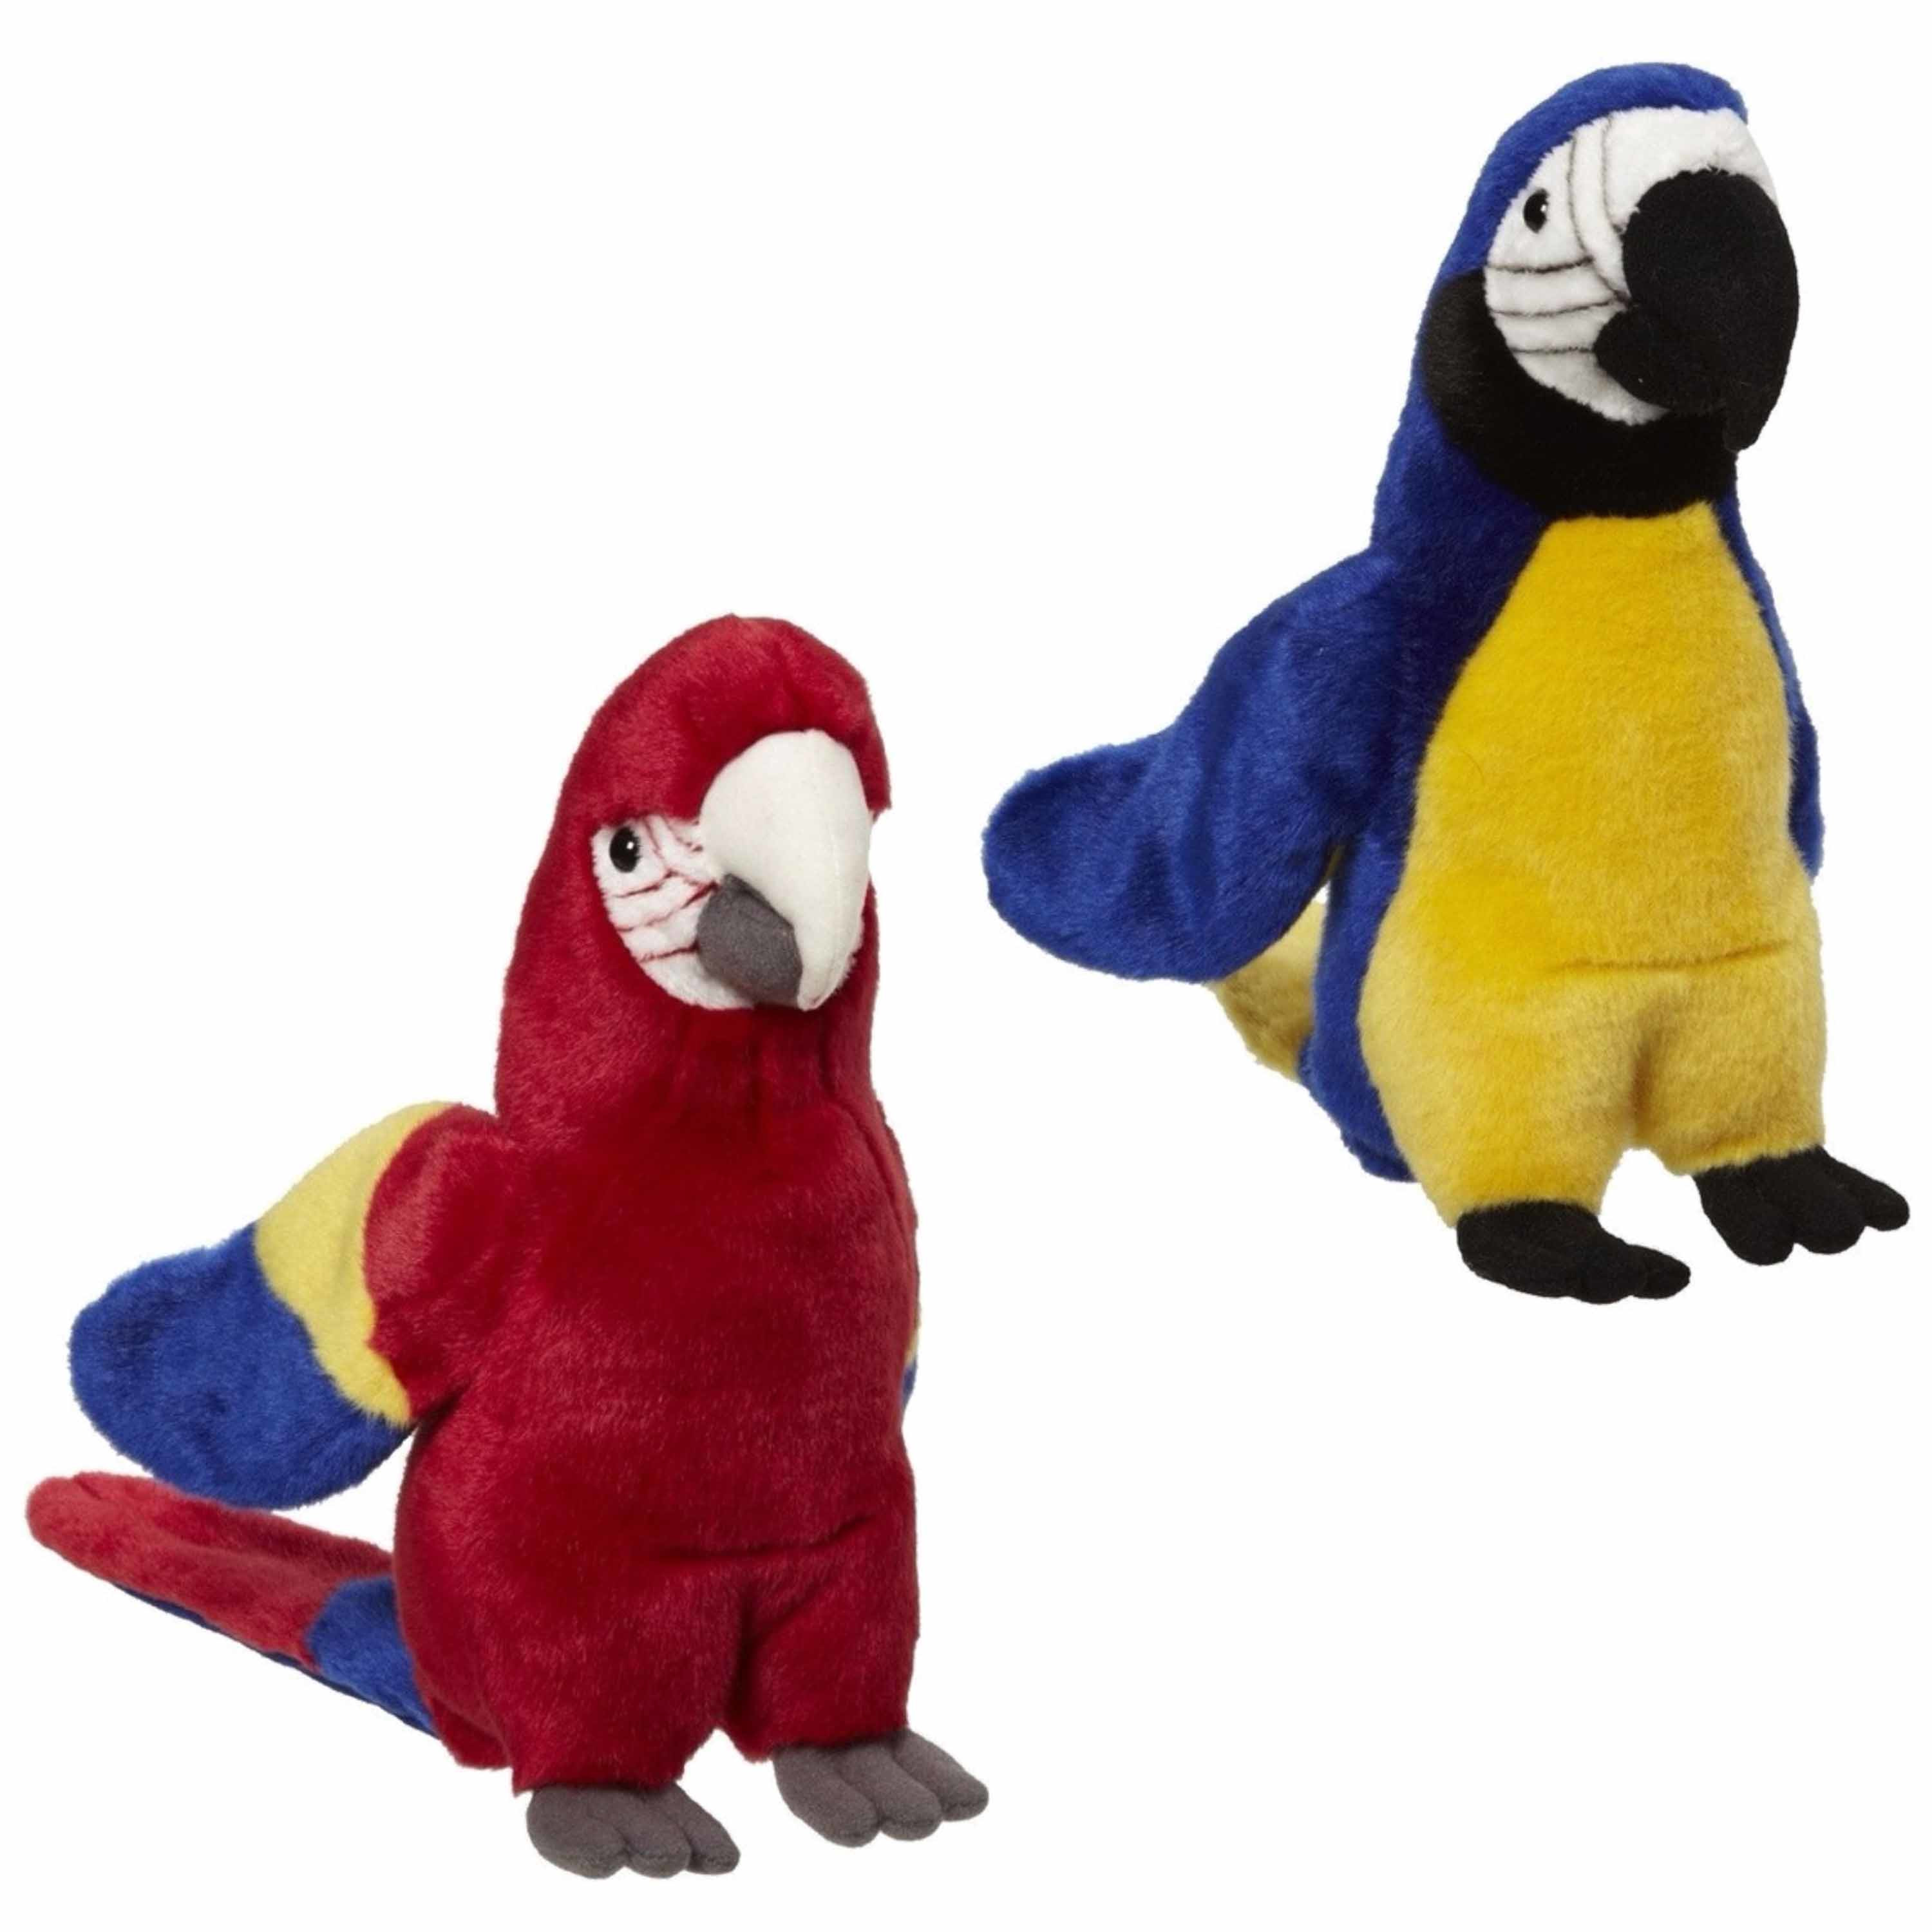 2x Pluche papegaaien knuffels rood en blauw 21 cm